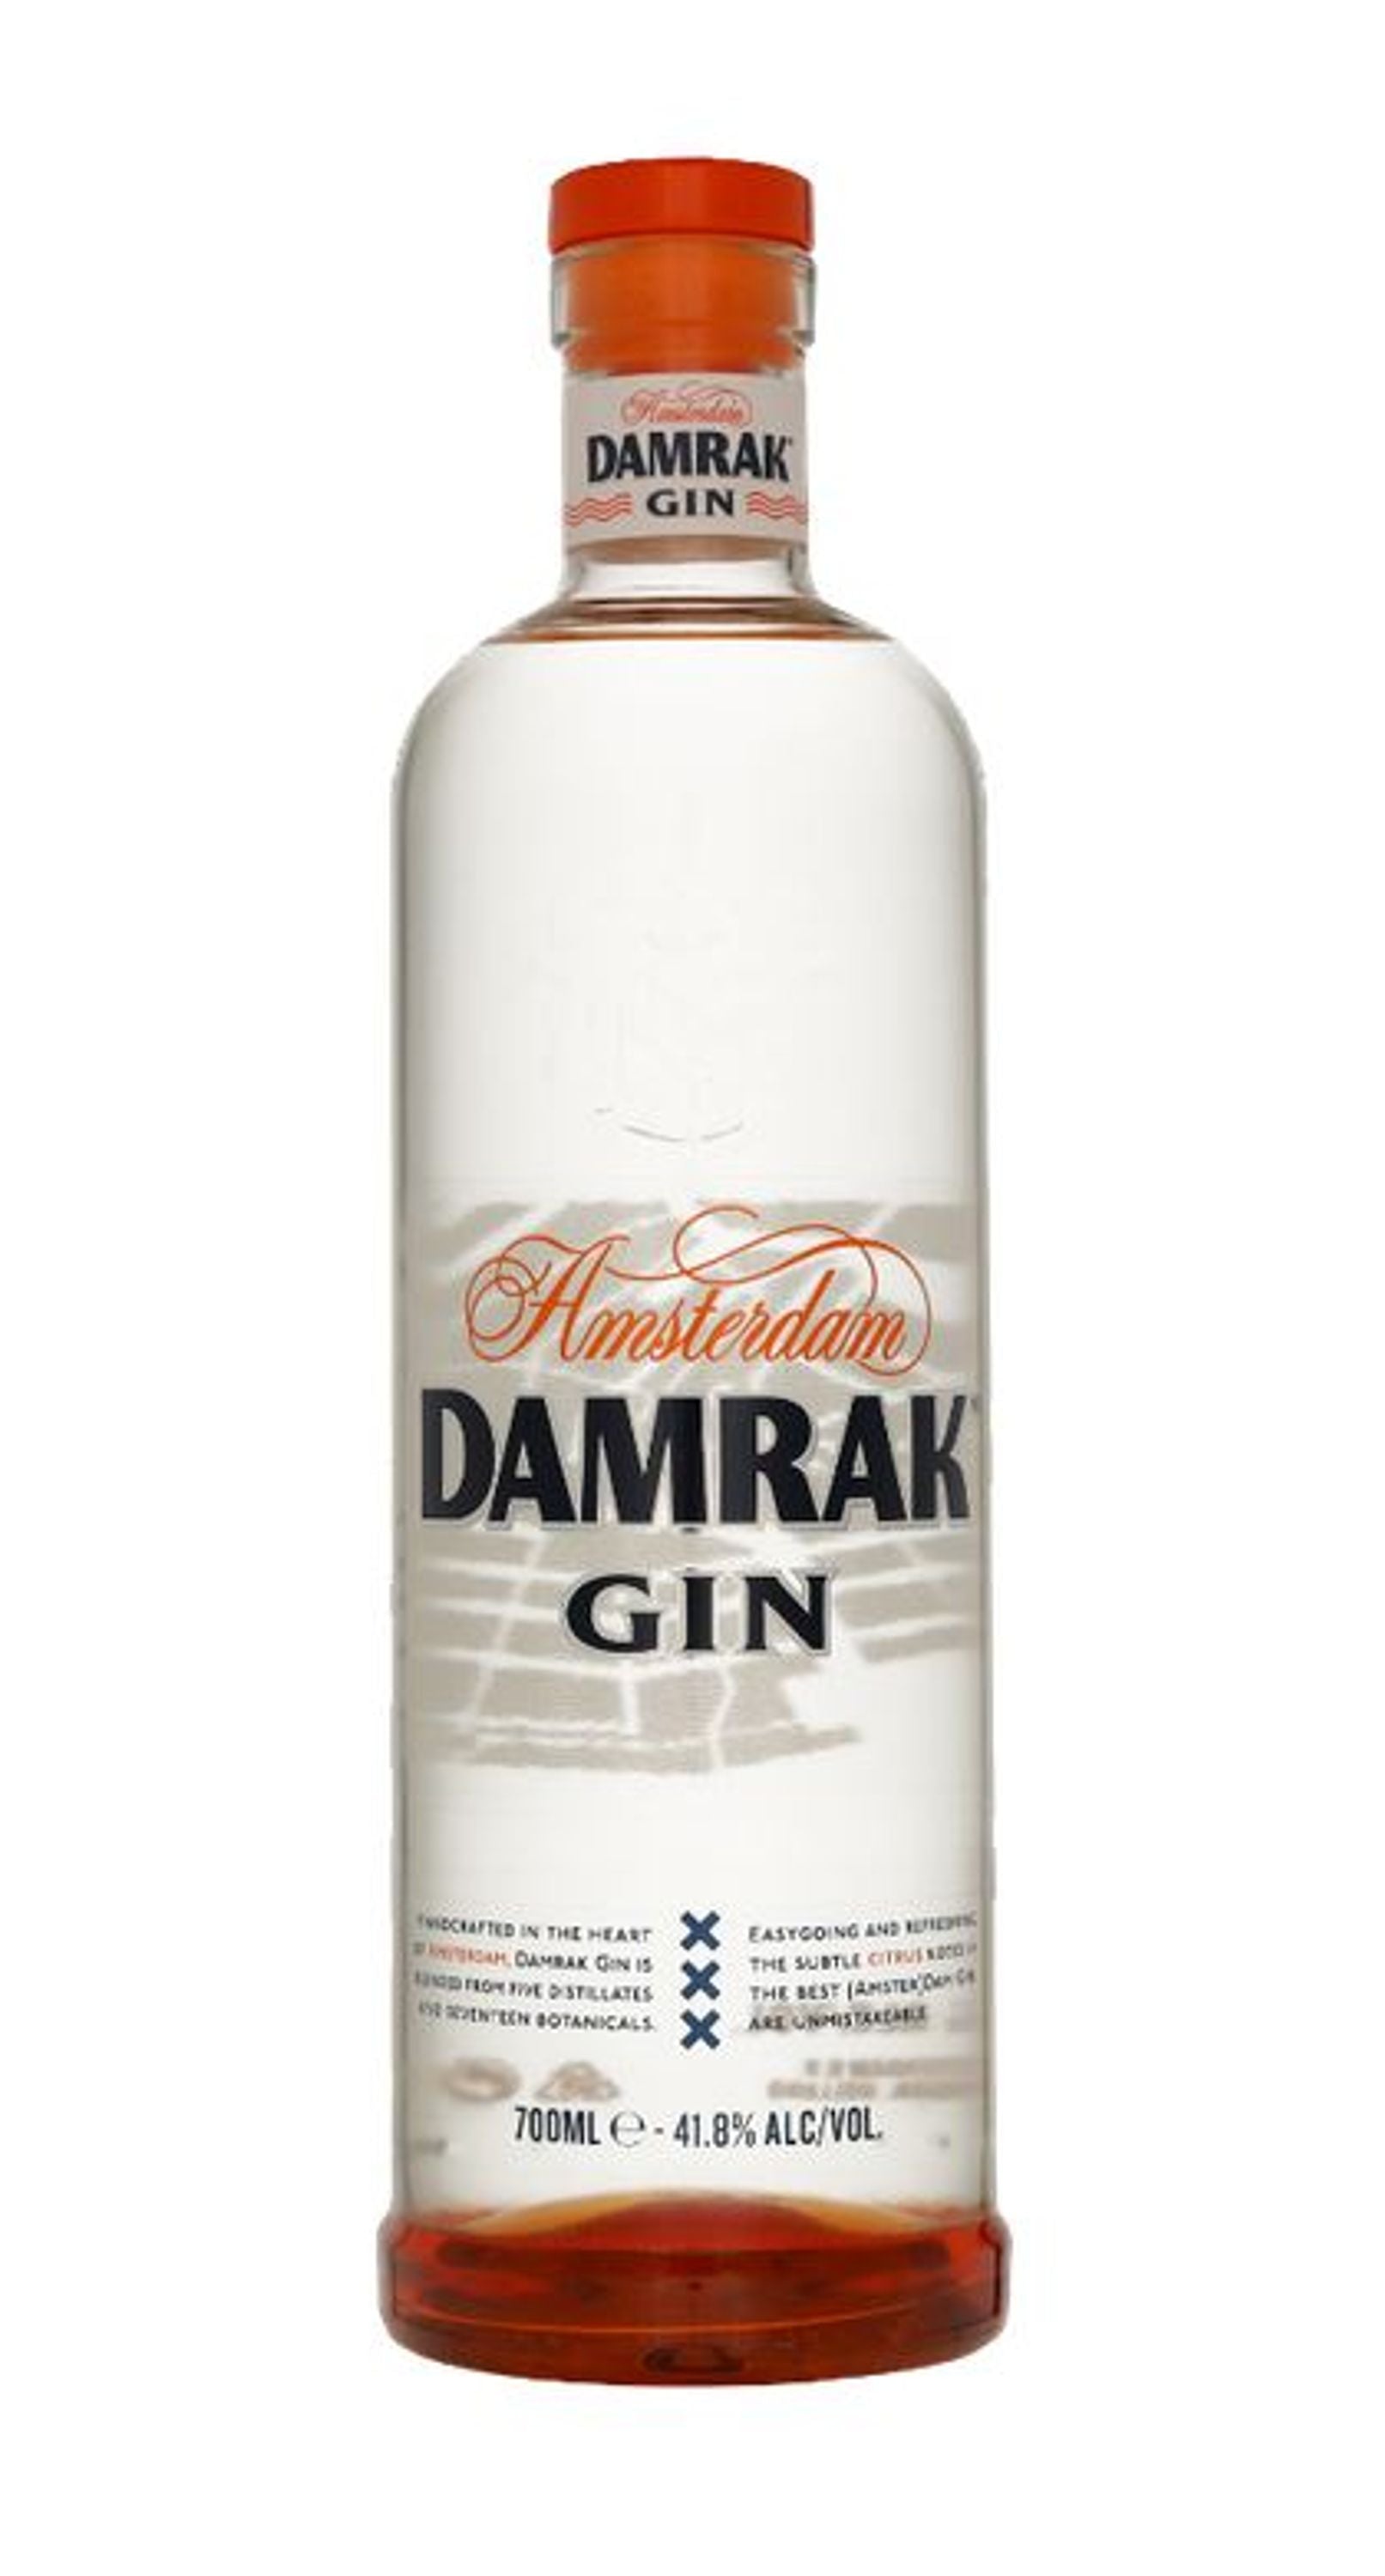 Damrak Gin 0.7l, alc. 41.8% by volume